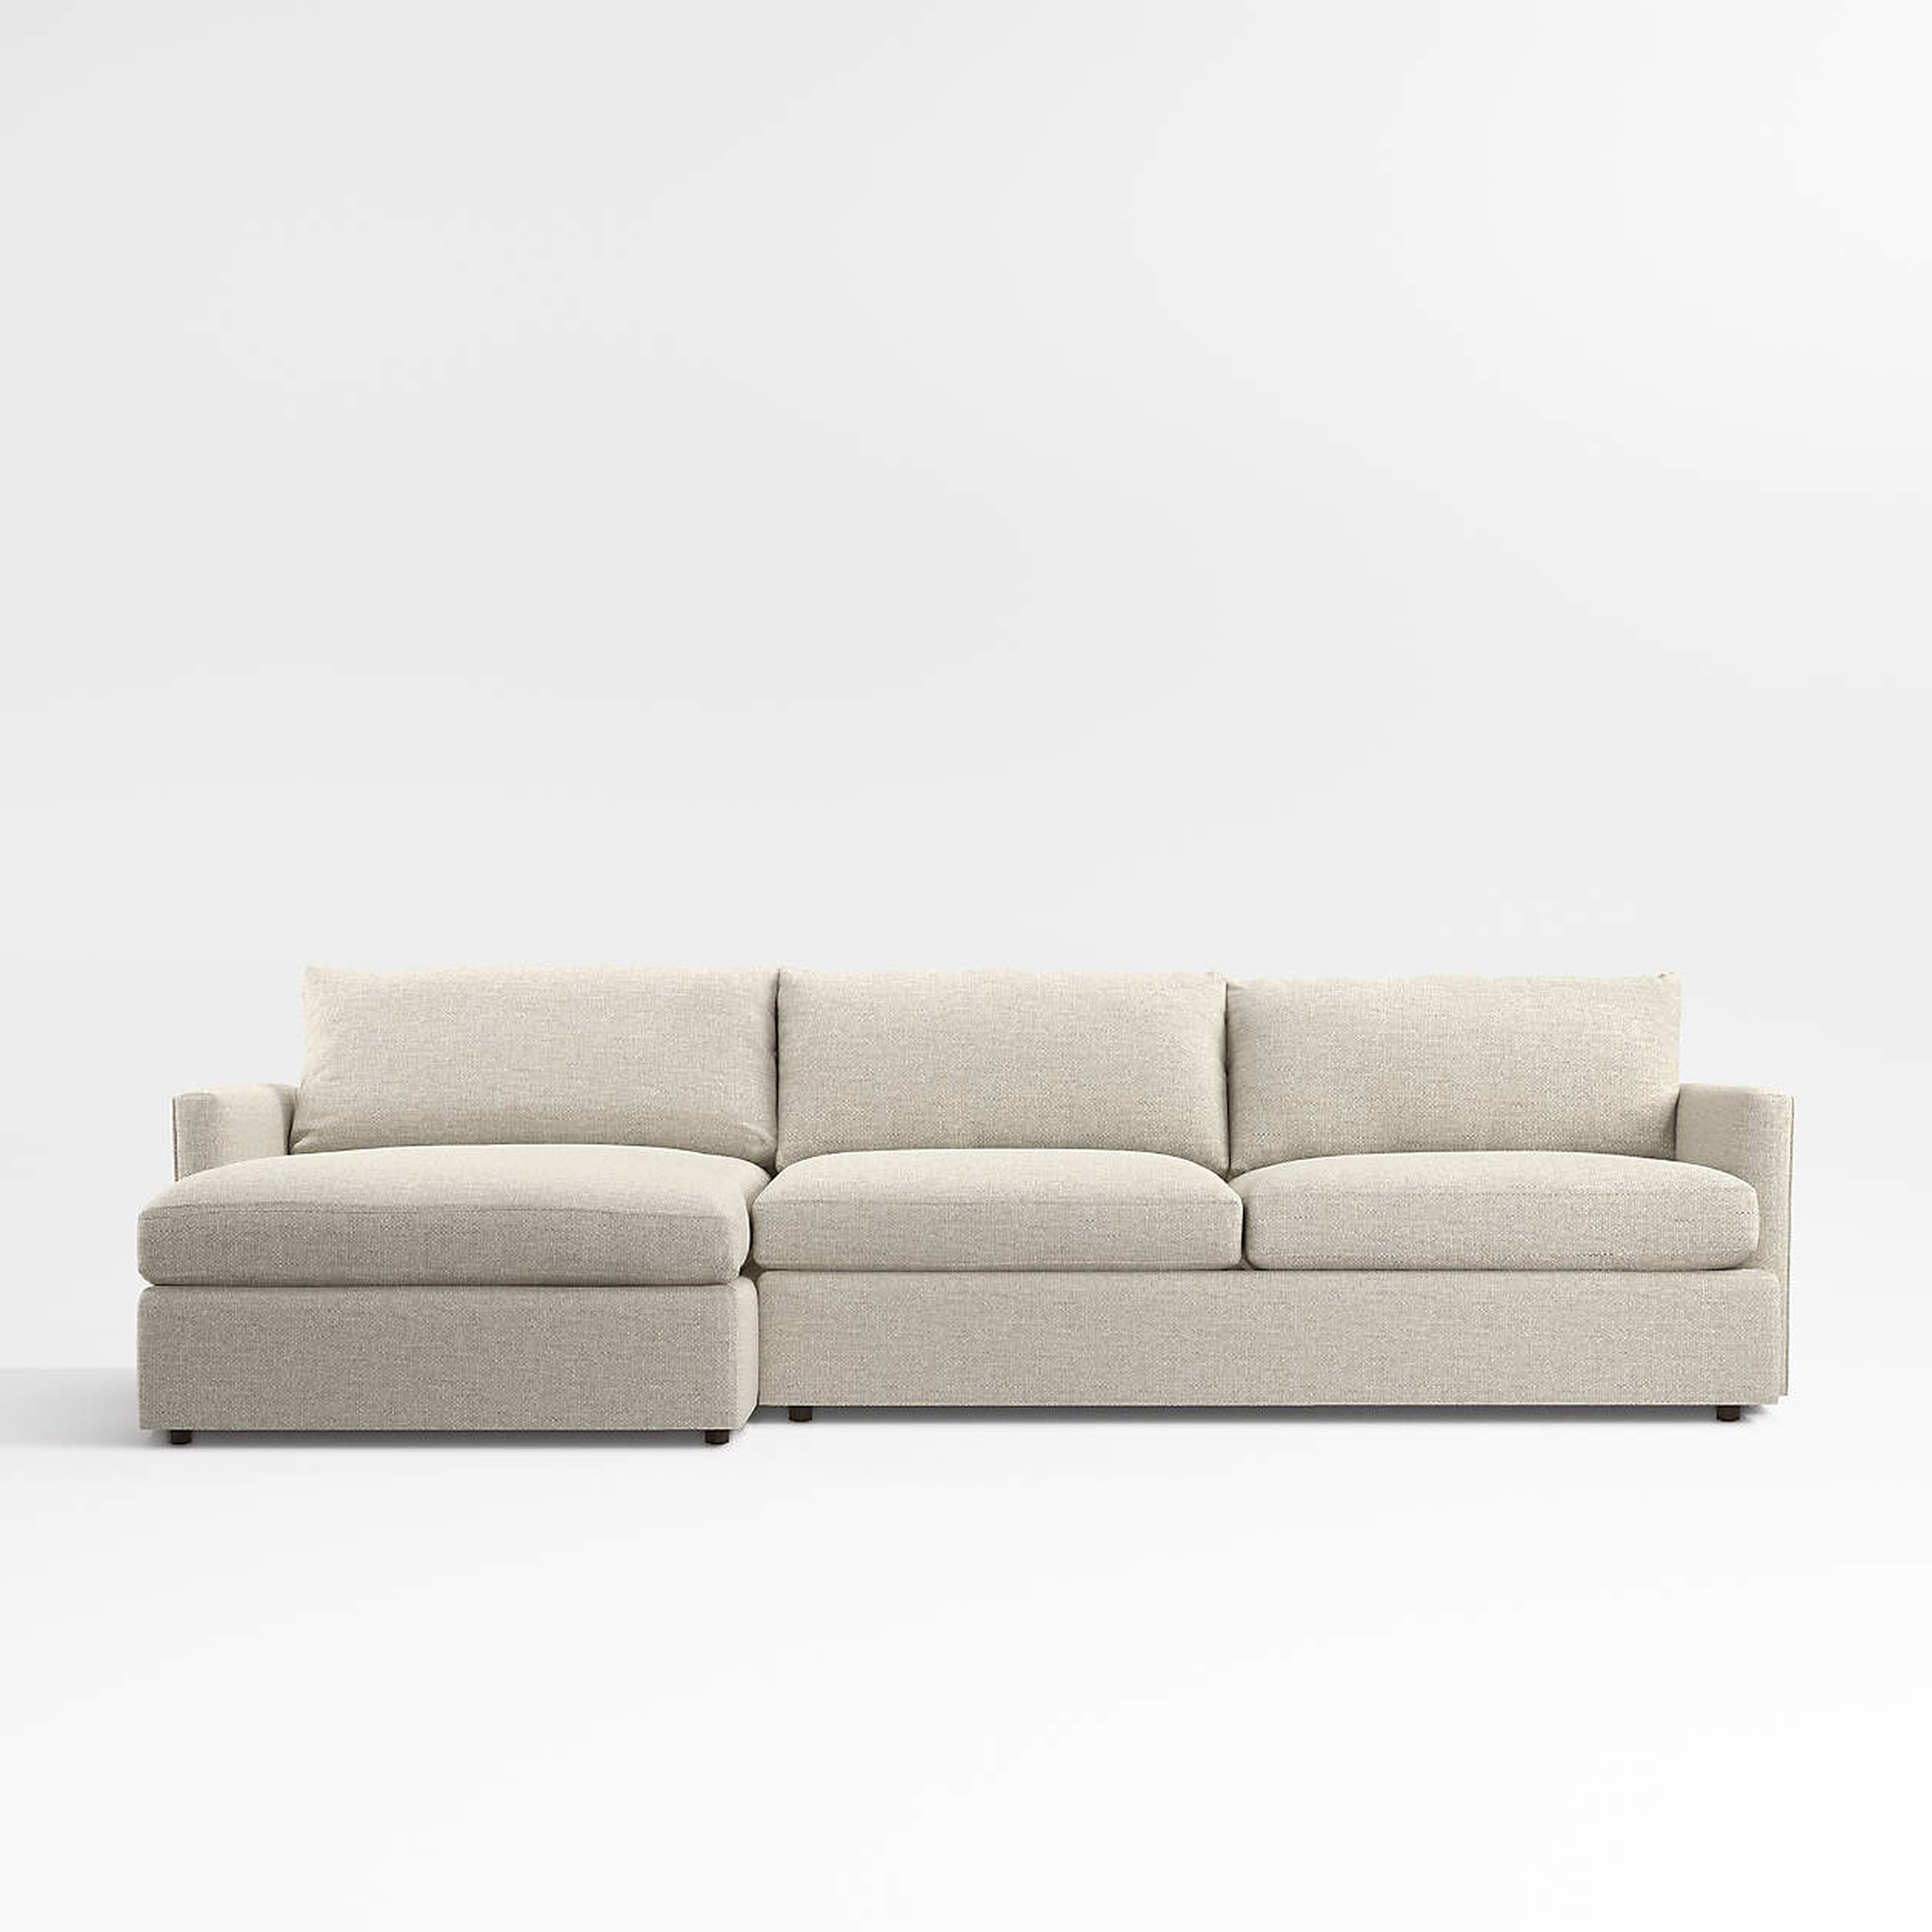 Lounge Deep 2-Piece Sectional Sofa - Taft Cement - Crate and Barrel